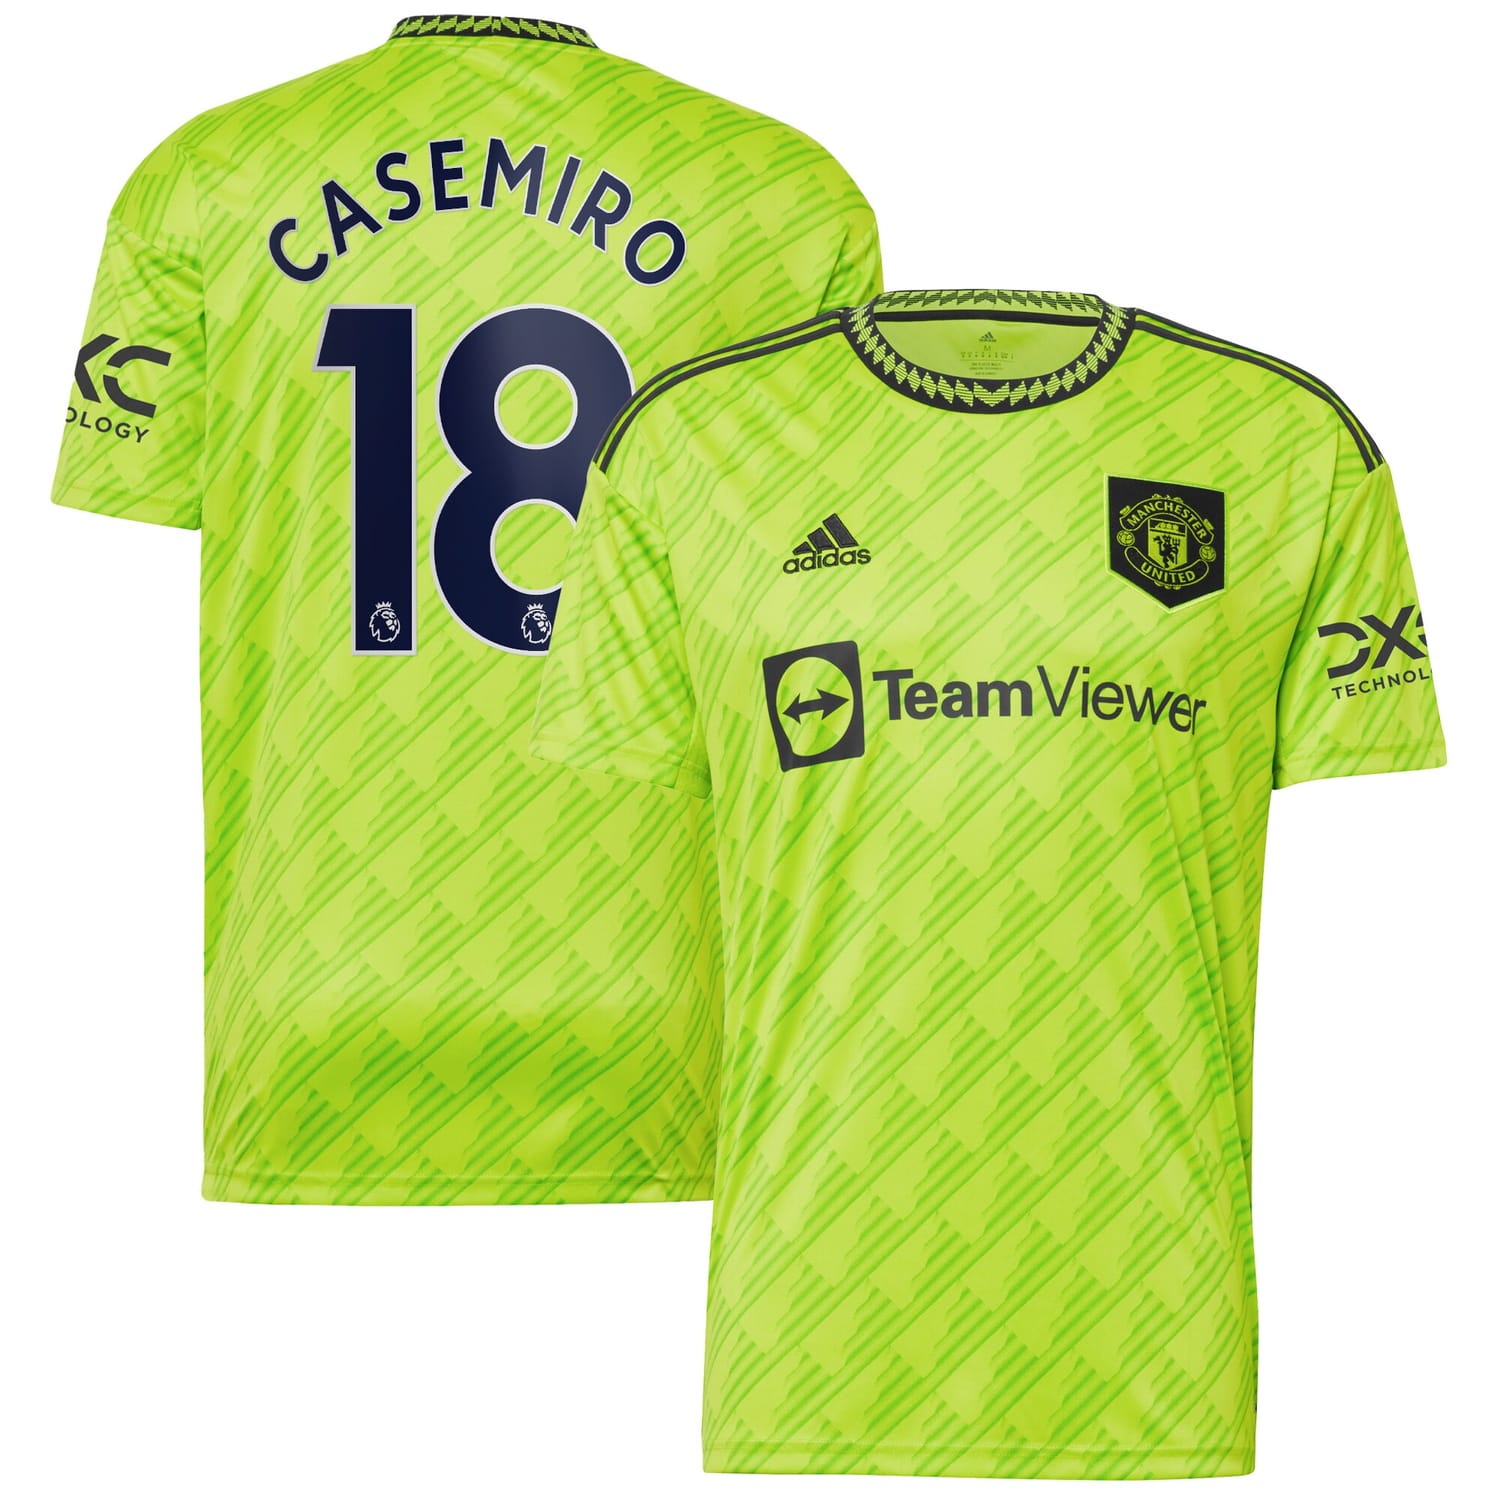 Premier League Manchester United Third Jersey Shirt Neon Green 2022-23 player Casemiro printing for Men